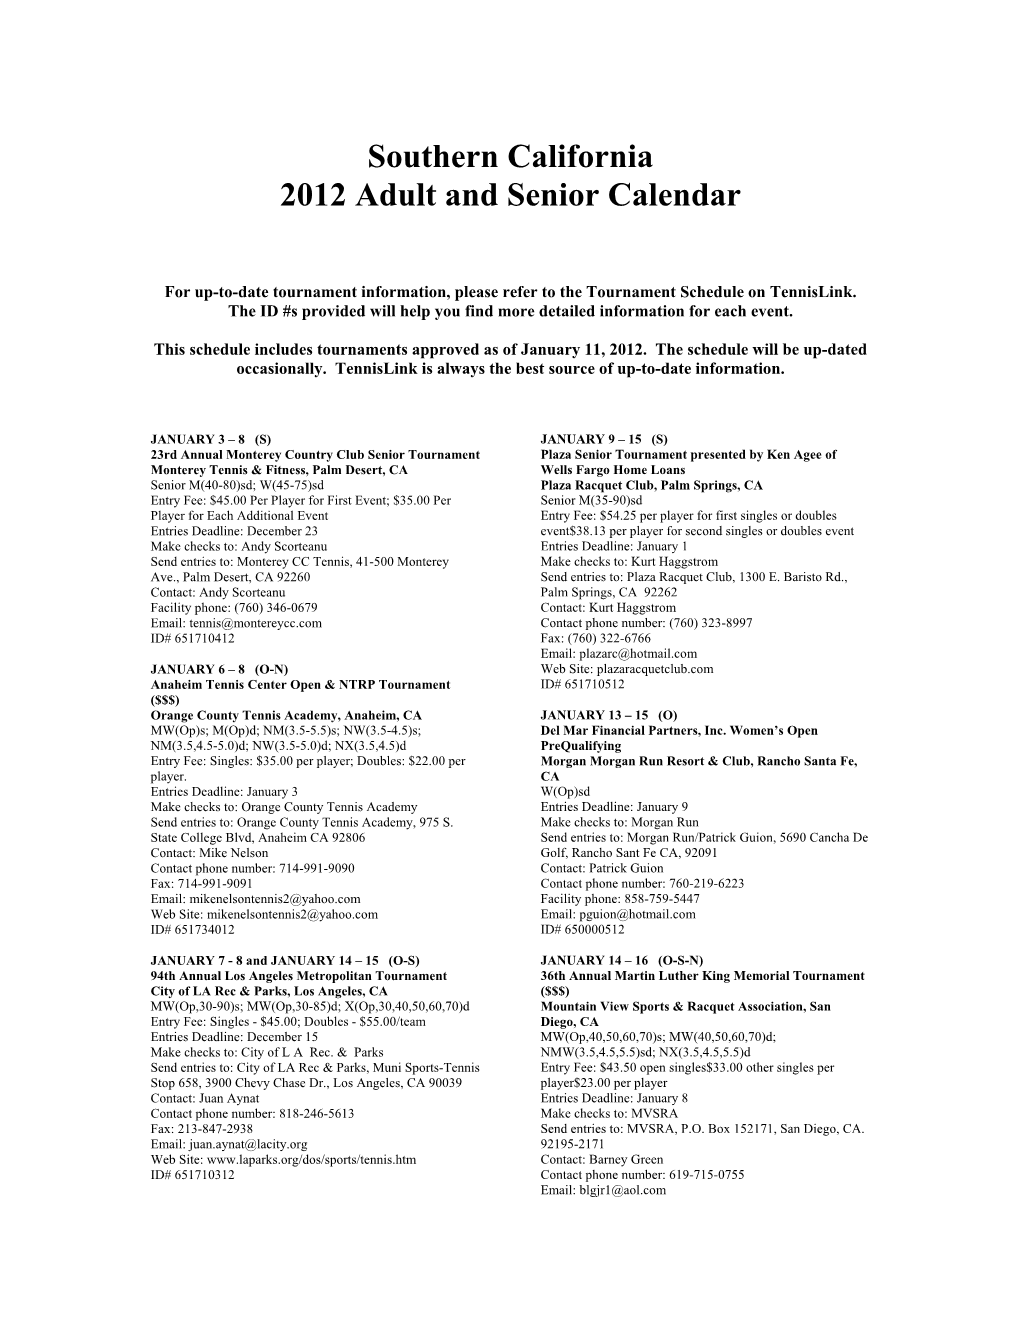 Southern California 2012 Adult and Senior Calendar